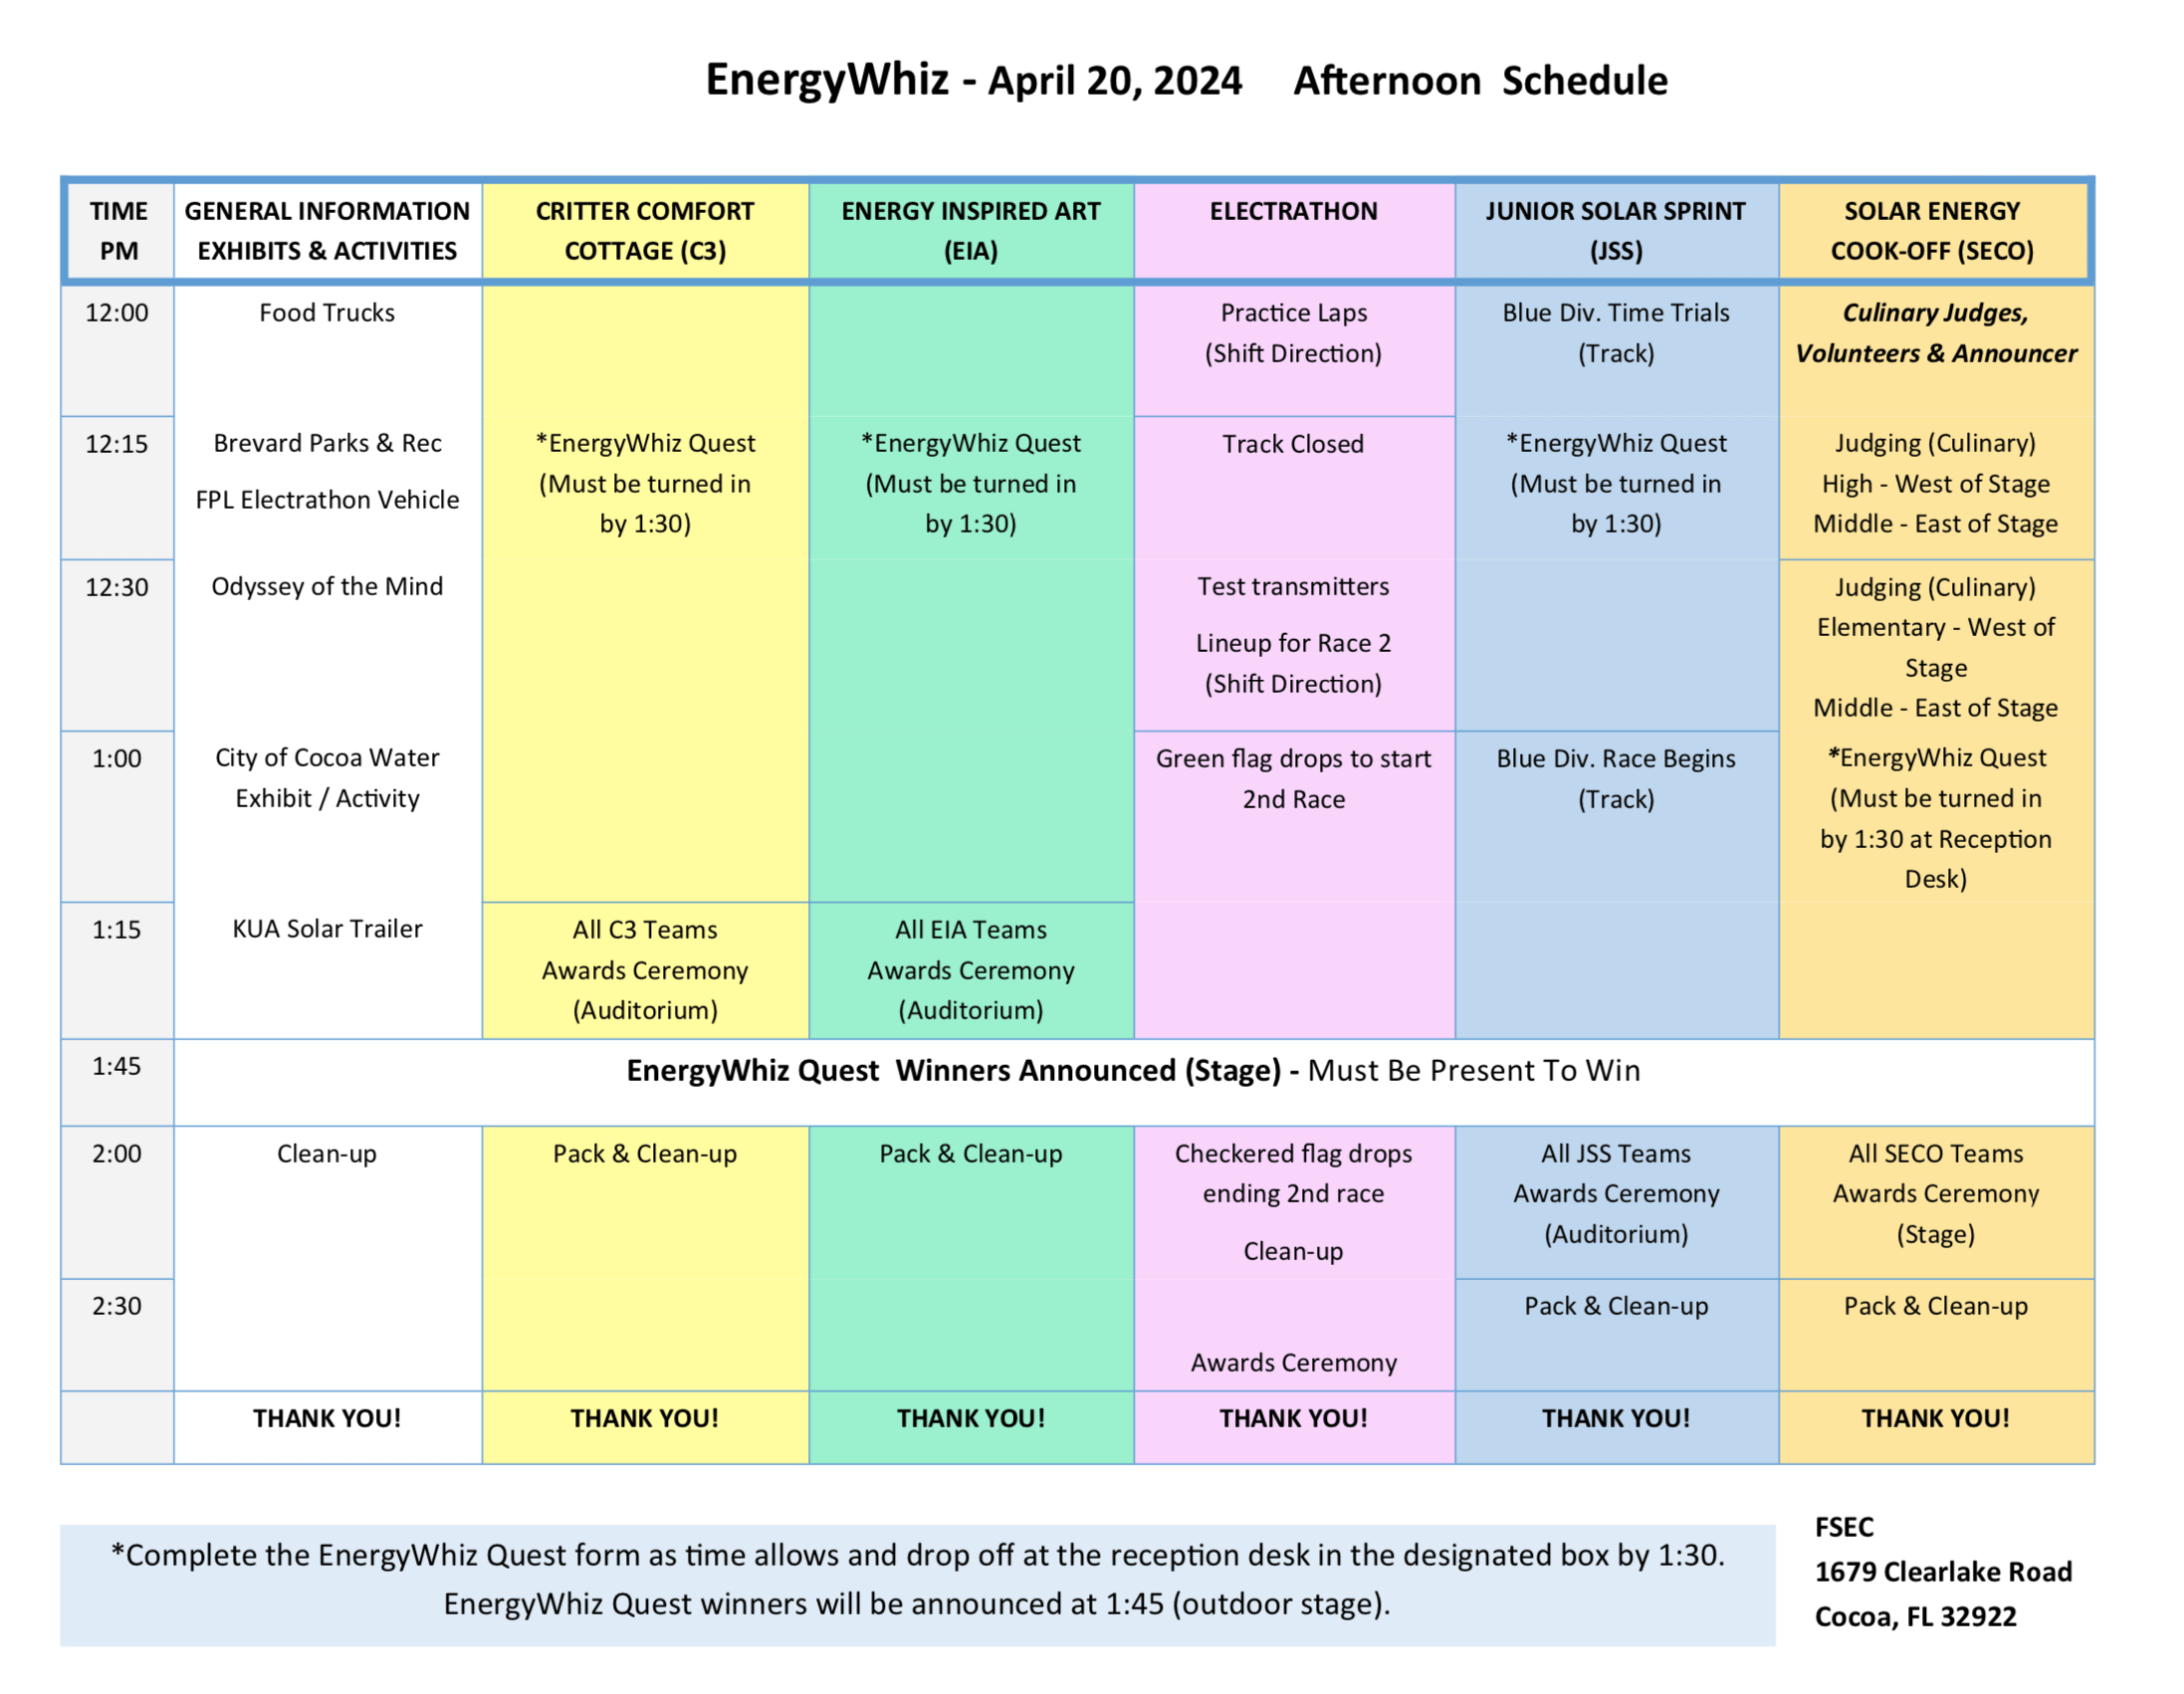 Afternoon Schedule, EnergyWhiz - April 20, 2024